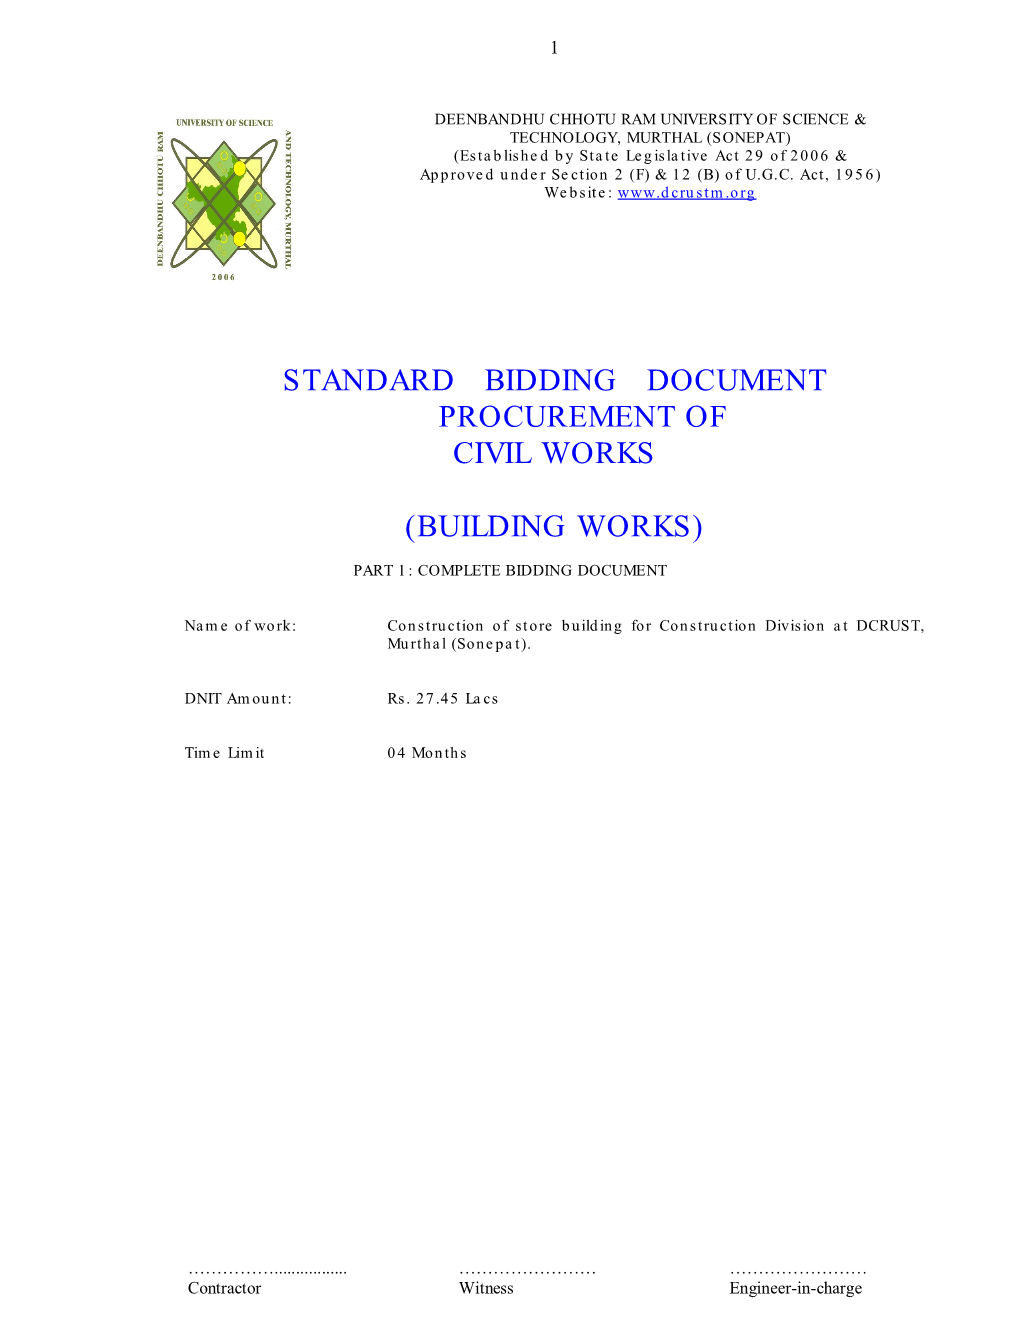 Standard Bidding Document Procurement of Civil Works